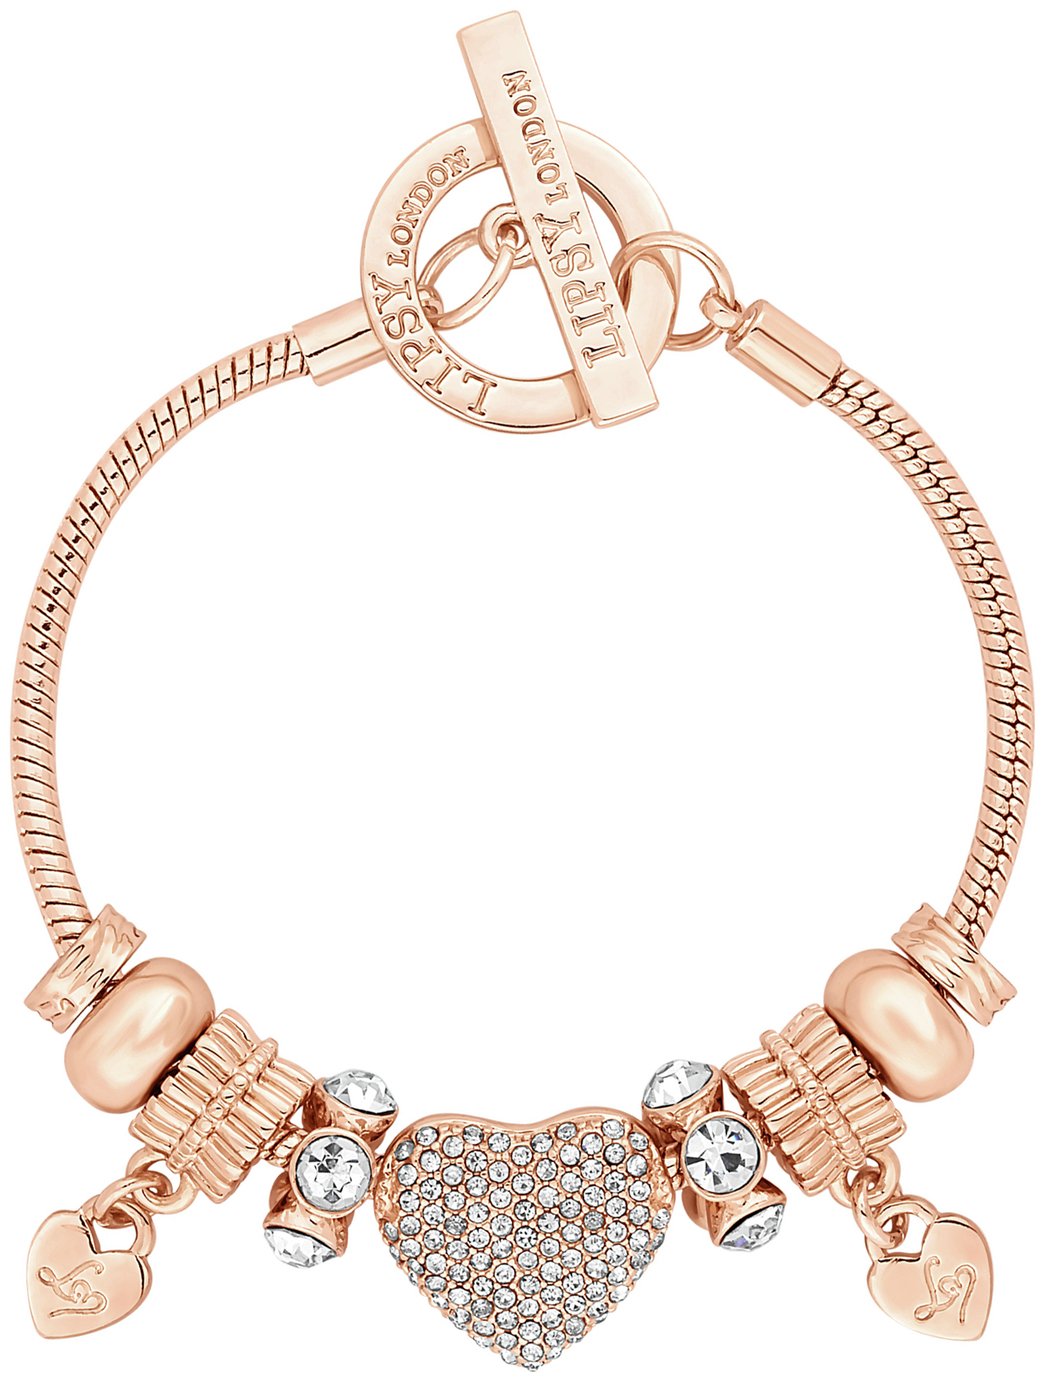 Lipsy Gold Colour Crystal Pave Heart Charm T-Bar Bracelet